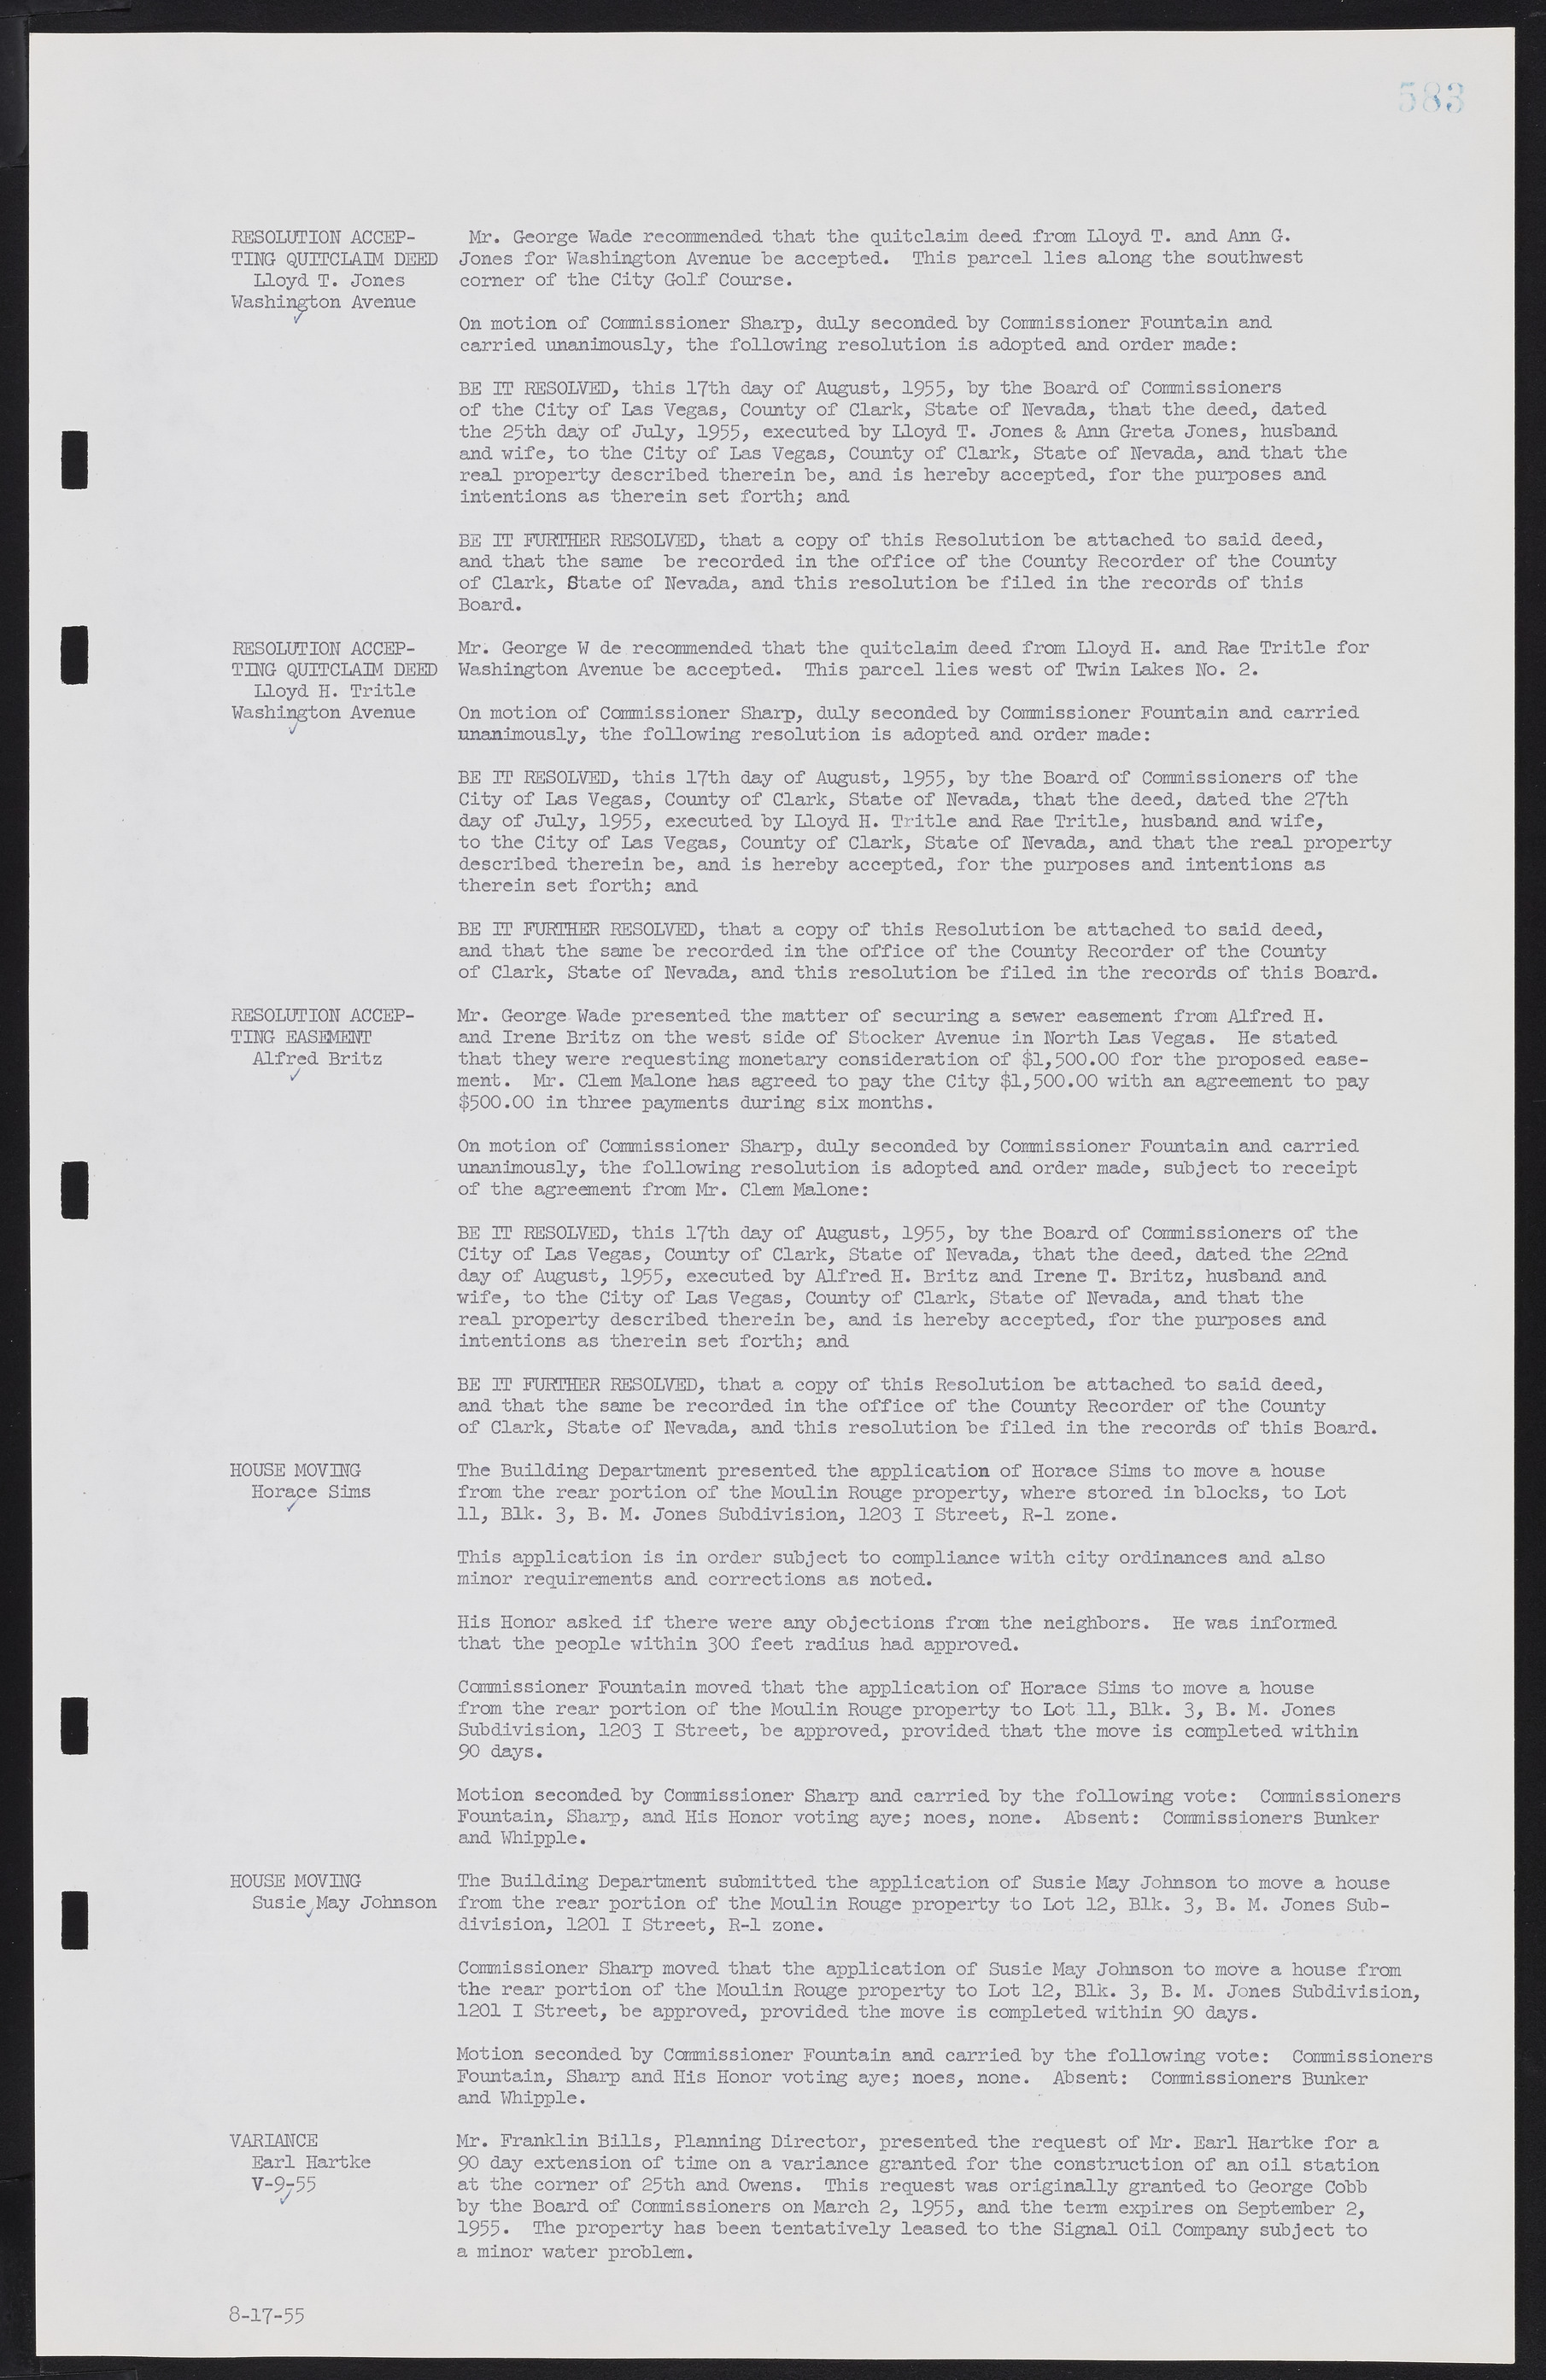 Las Vegas City Commission Minutes, February 17, 1954 to September 21, 1955, lvc000009-589